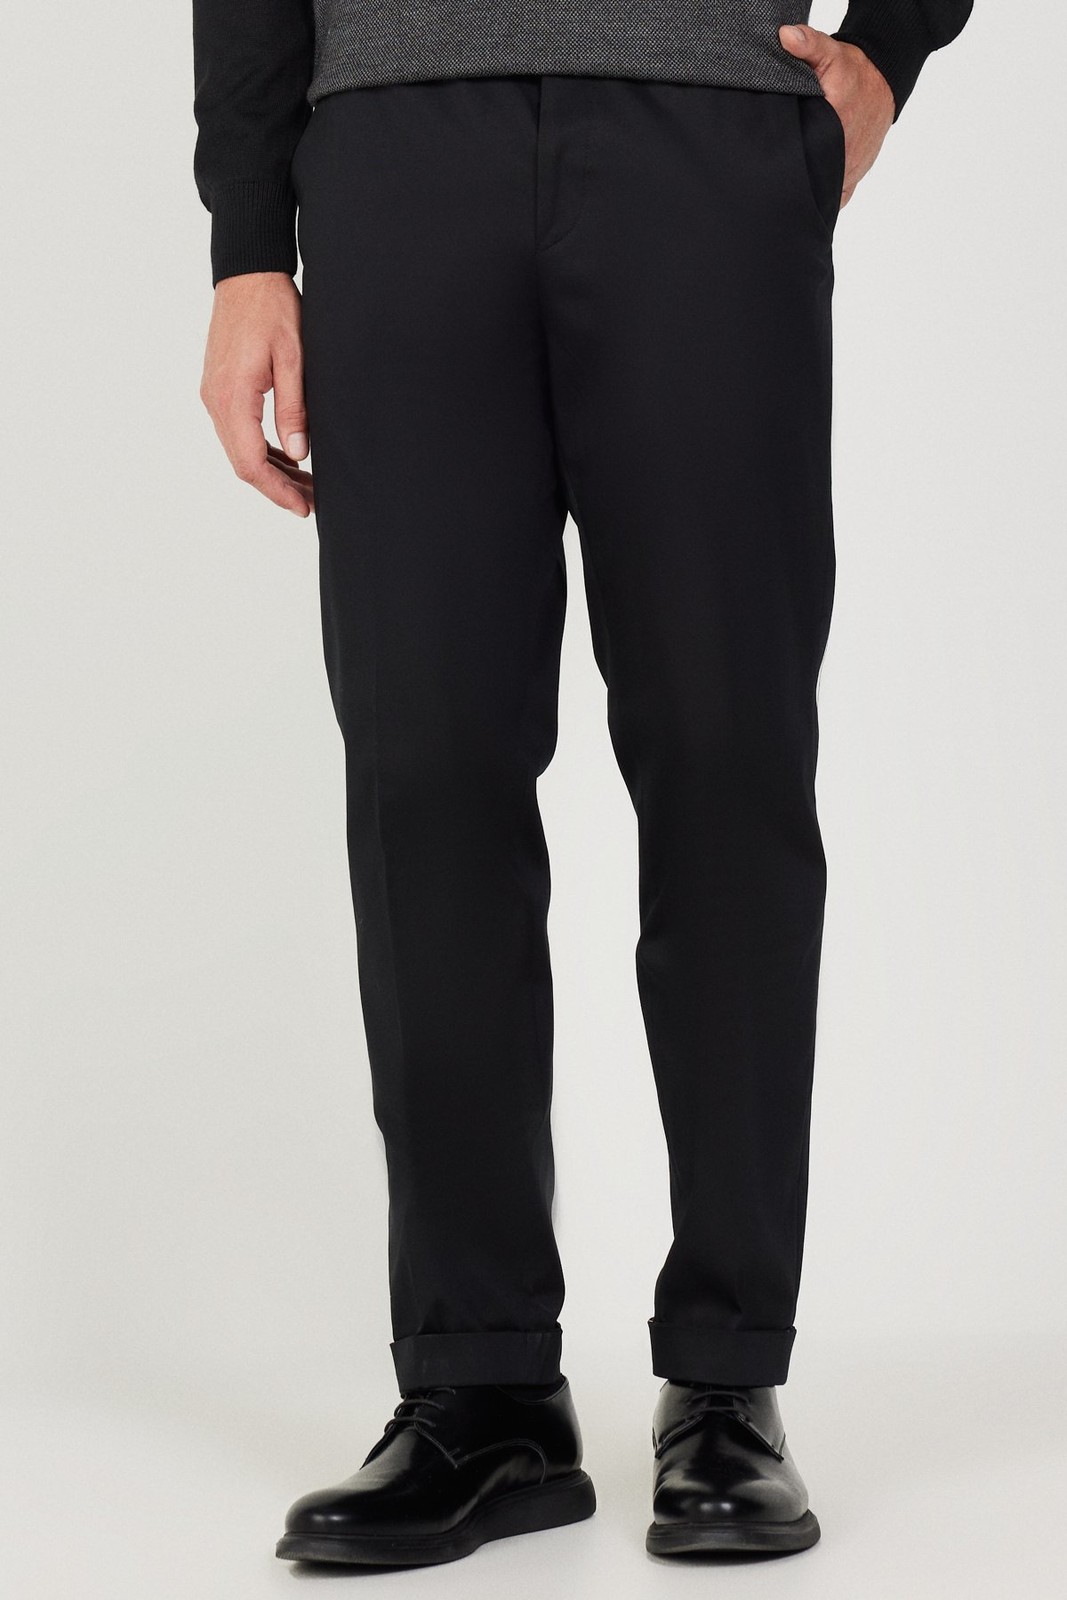 ALTINYILDIZ CLASSICS Men's Black Slim Fit Slim Fit Gabardine Fabric Patterned Cotton Elastic Waist Trousers